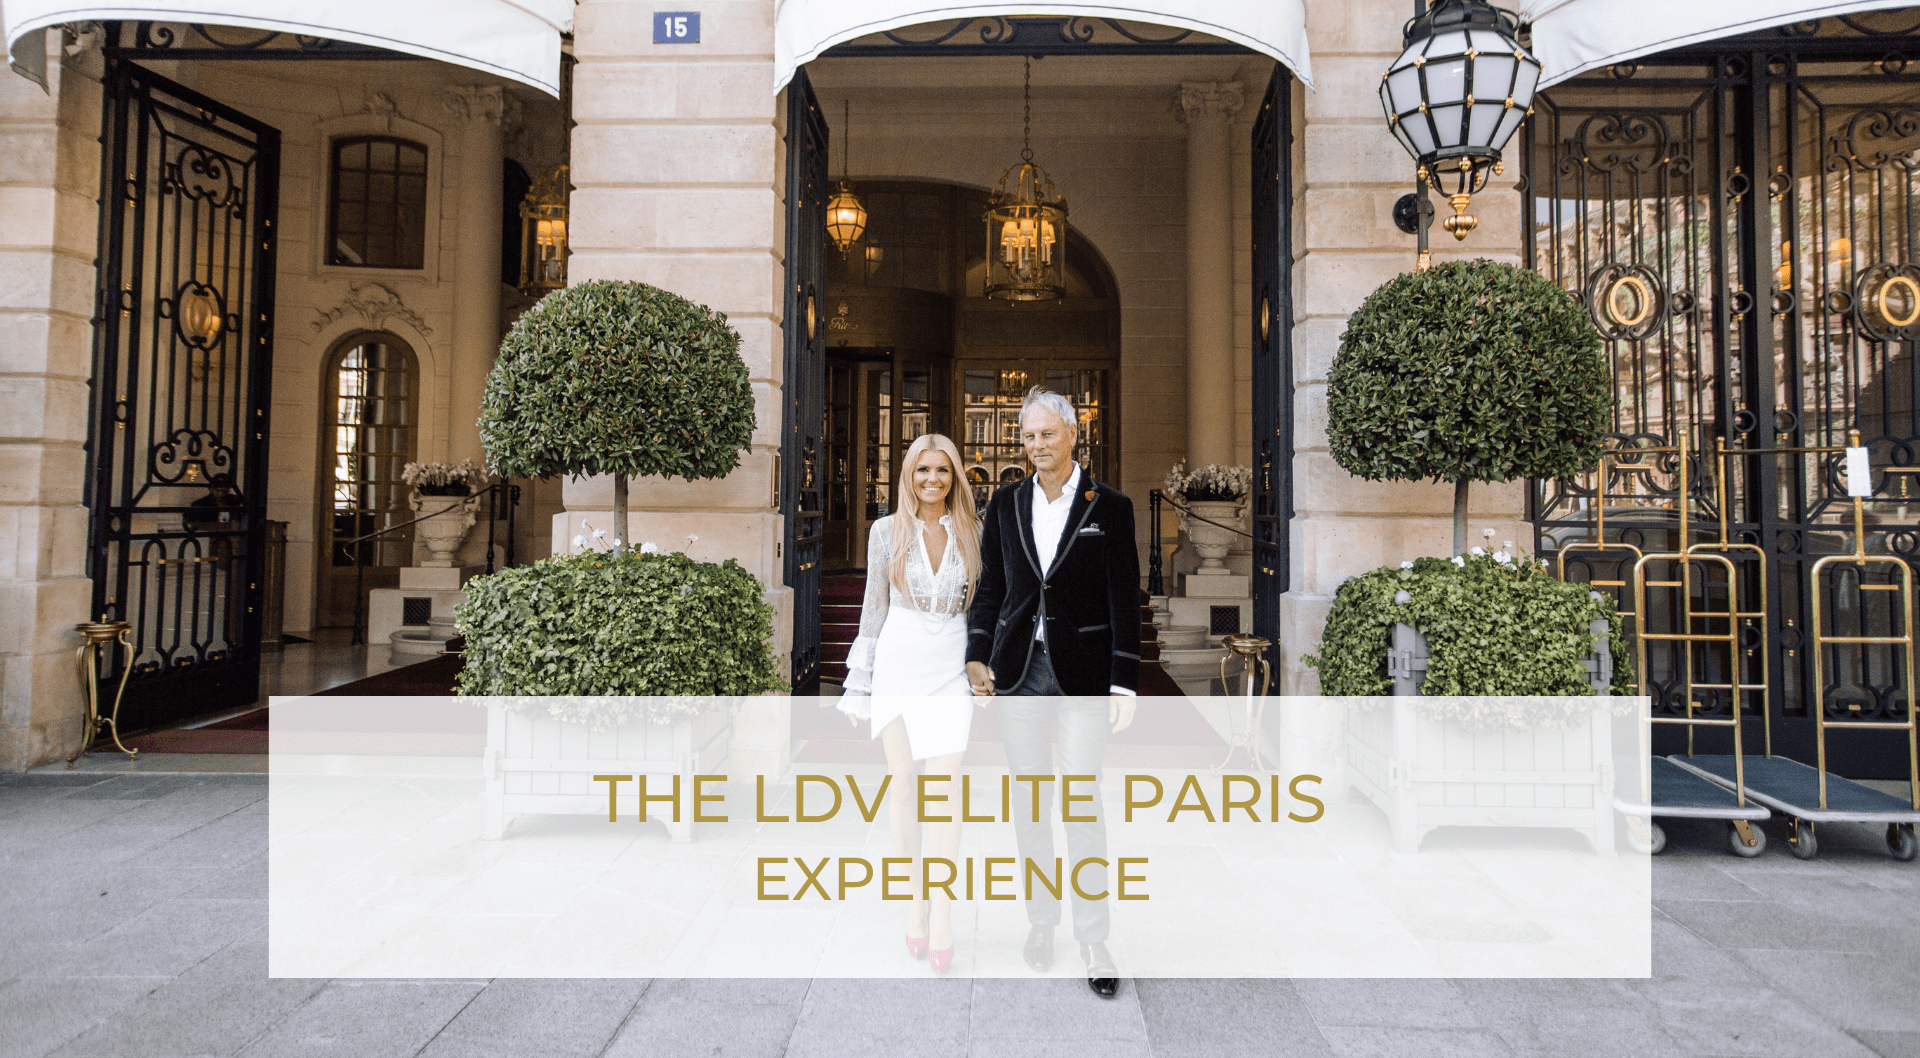 THE LDV ELITE PARIS EXPERIENCE 2